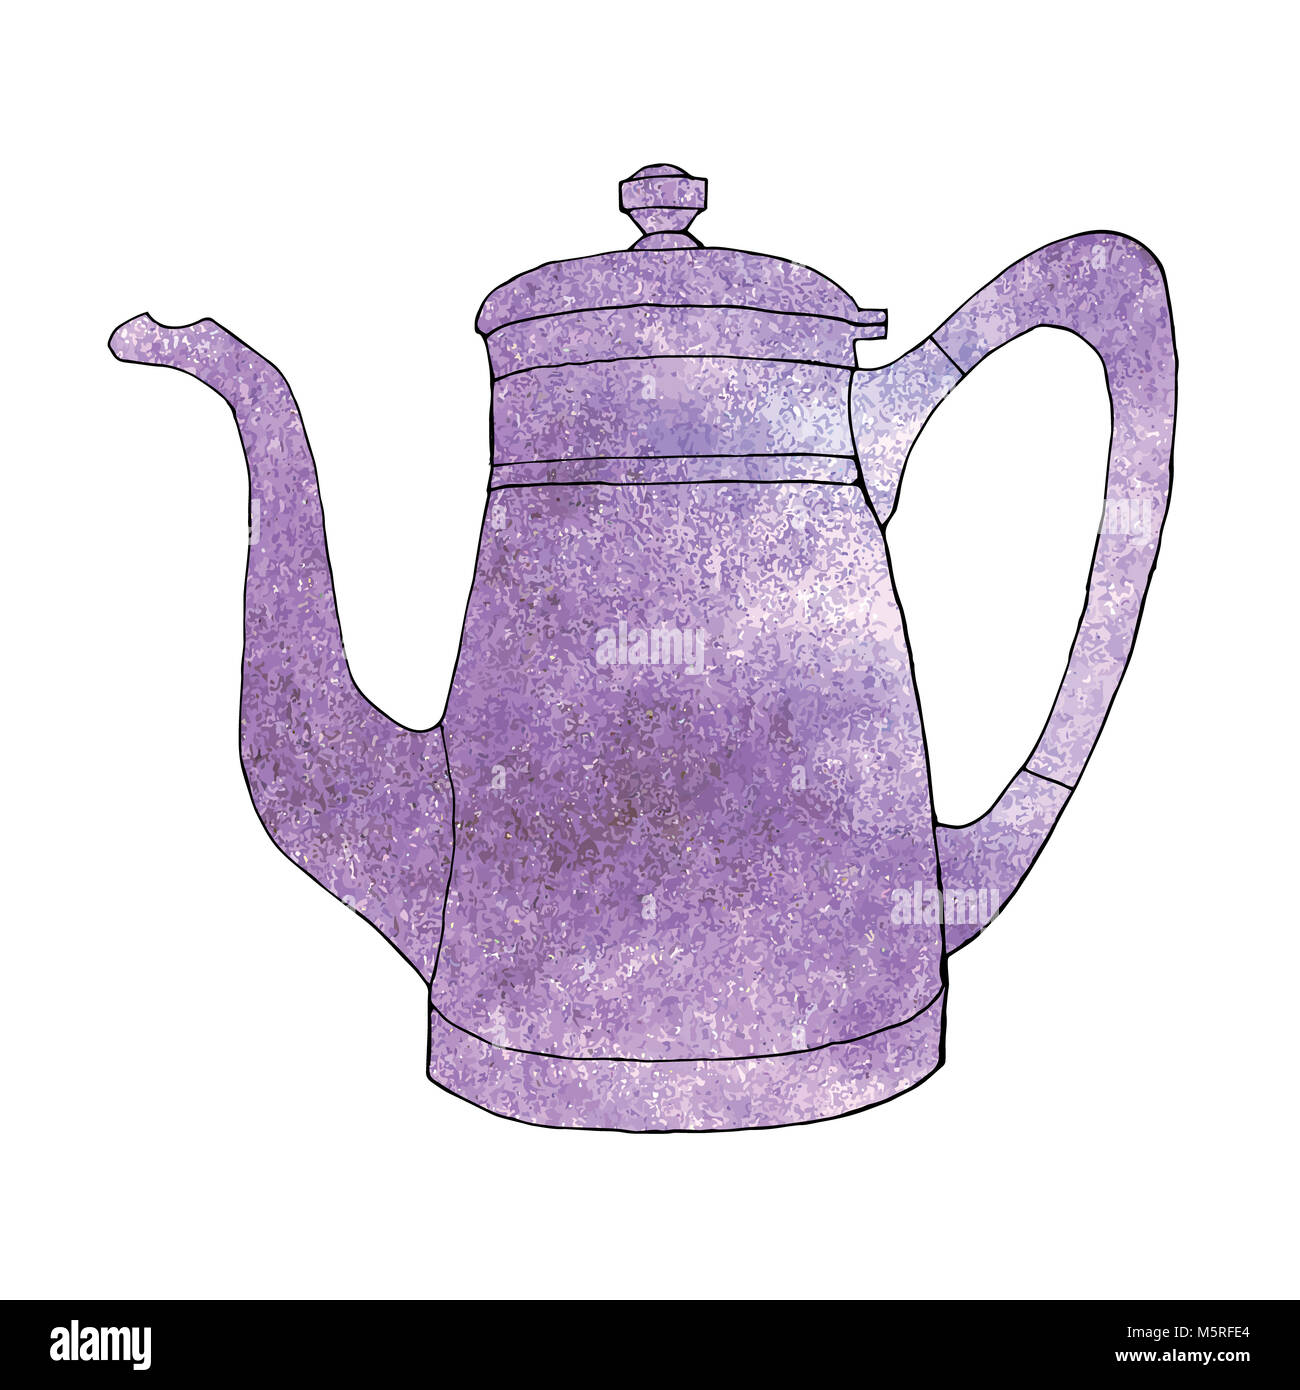 https://c8.alamy.com/comp/M5RFE4/ultra-violet-watercolor-hand-drawn-coffeeapotvector-illustration-M5RFE4.jpg